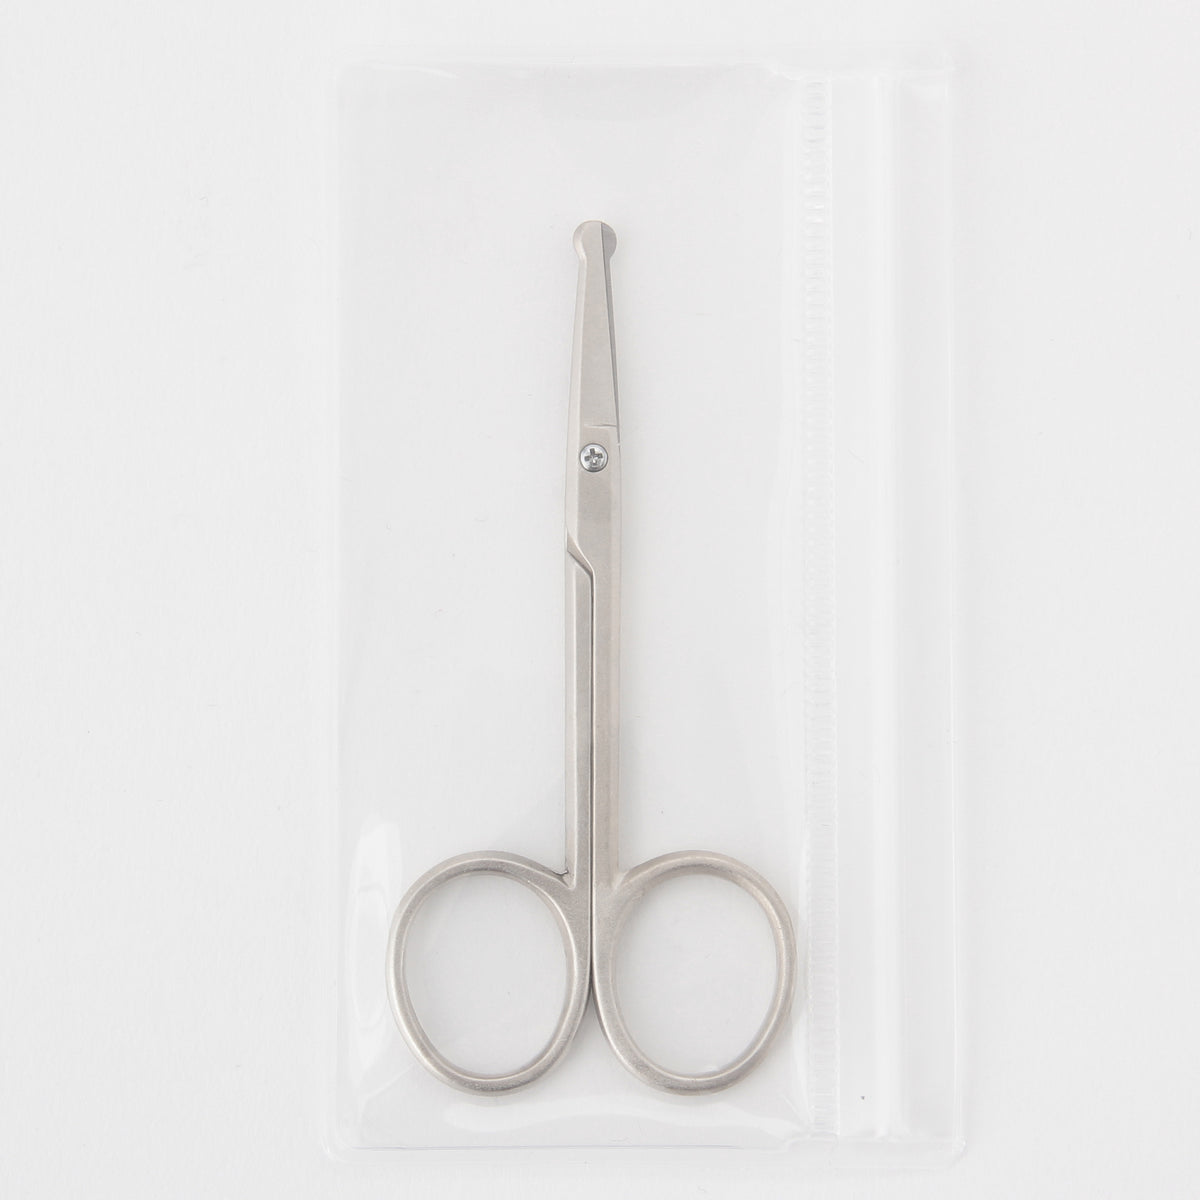  MUJI Stainless Steel Scissors - Clear : Industrial